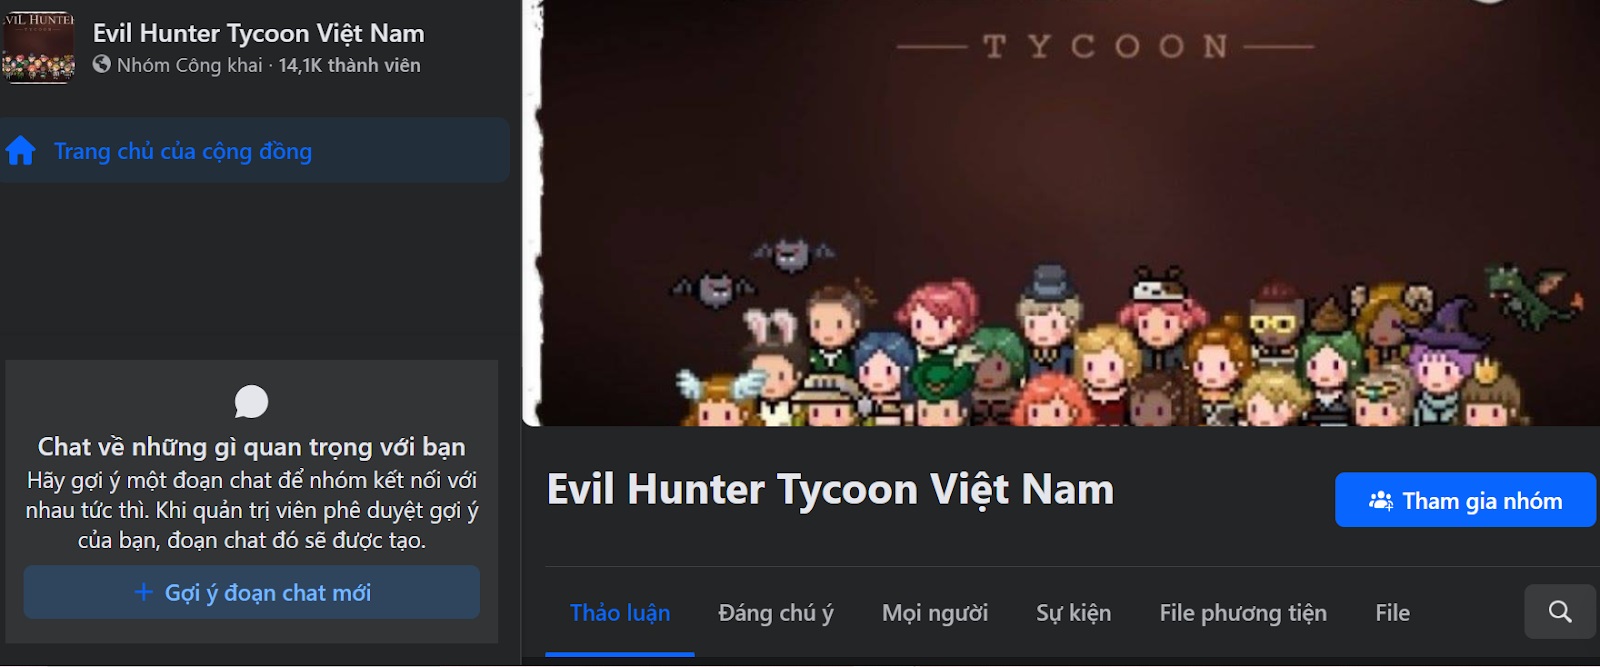 code evil hunter tycoon 13 jpg